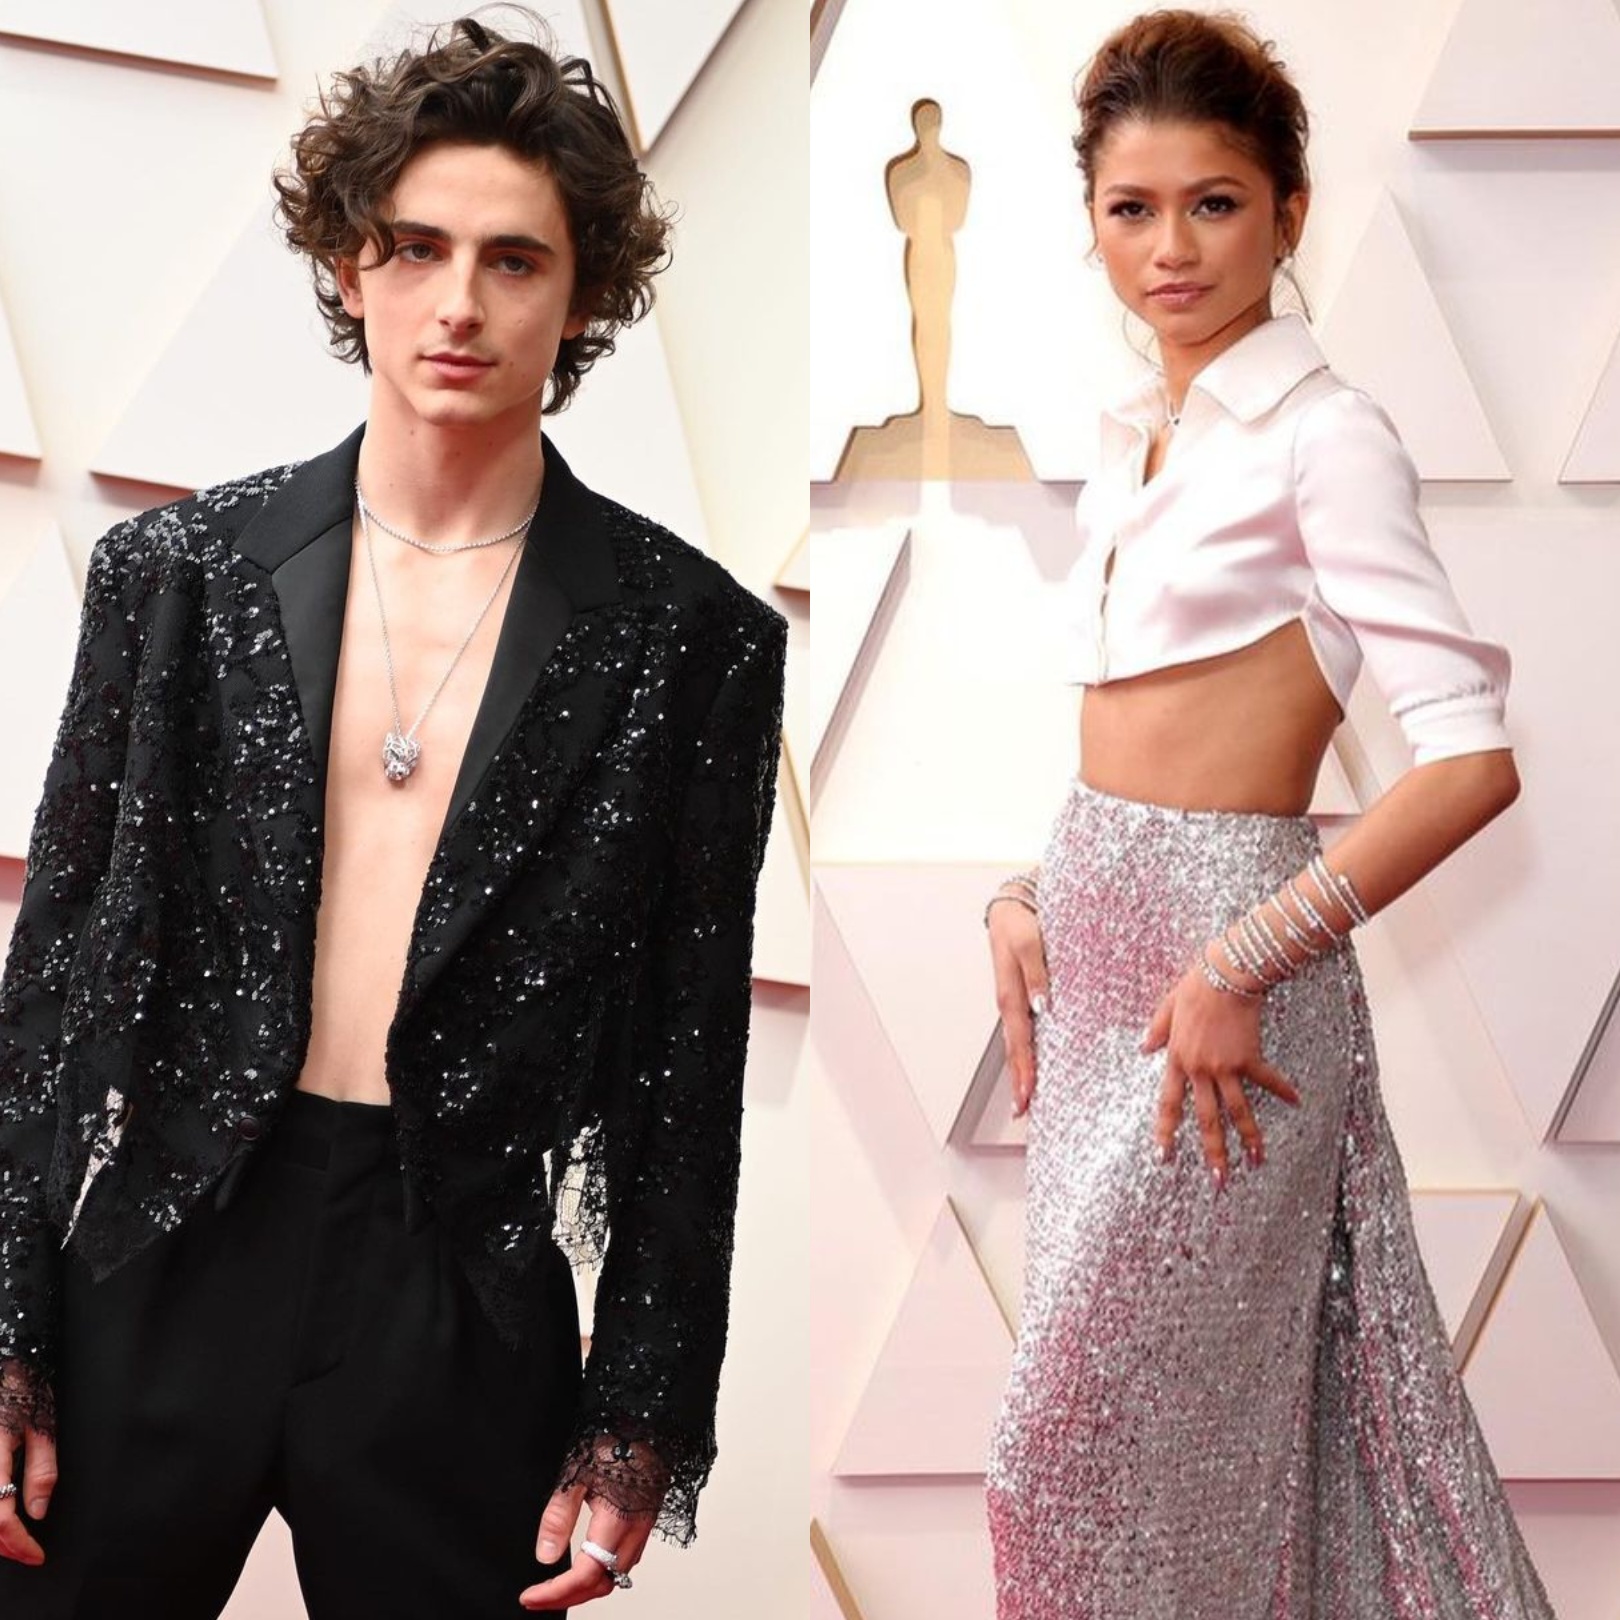 Timothée Chalamet crop top tuxedo and Zendaya Glitter gown on red carpet of Oscars 2022